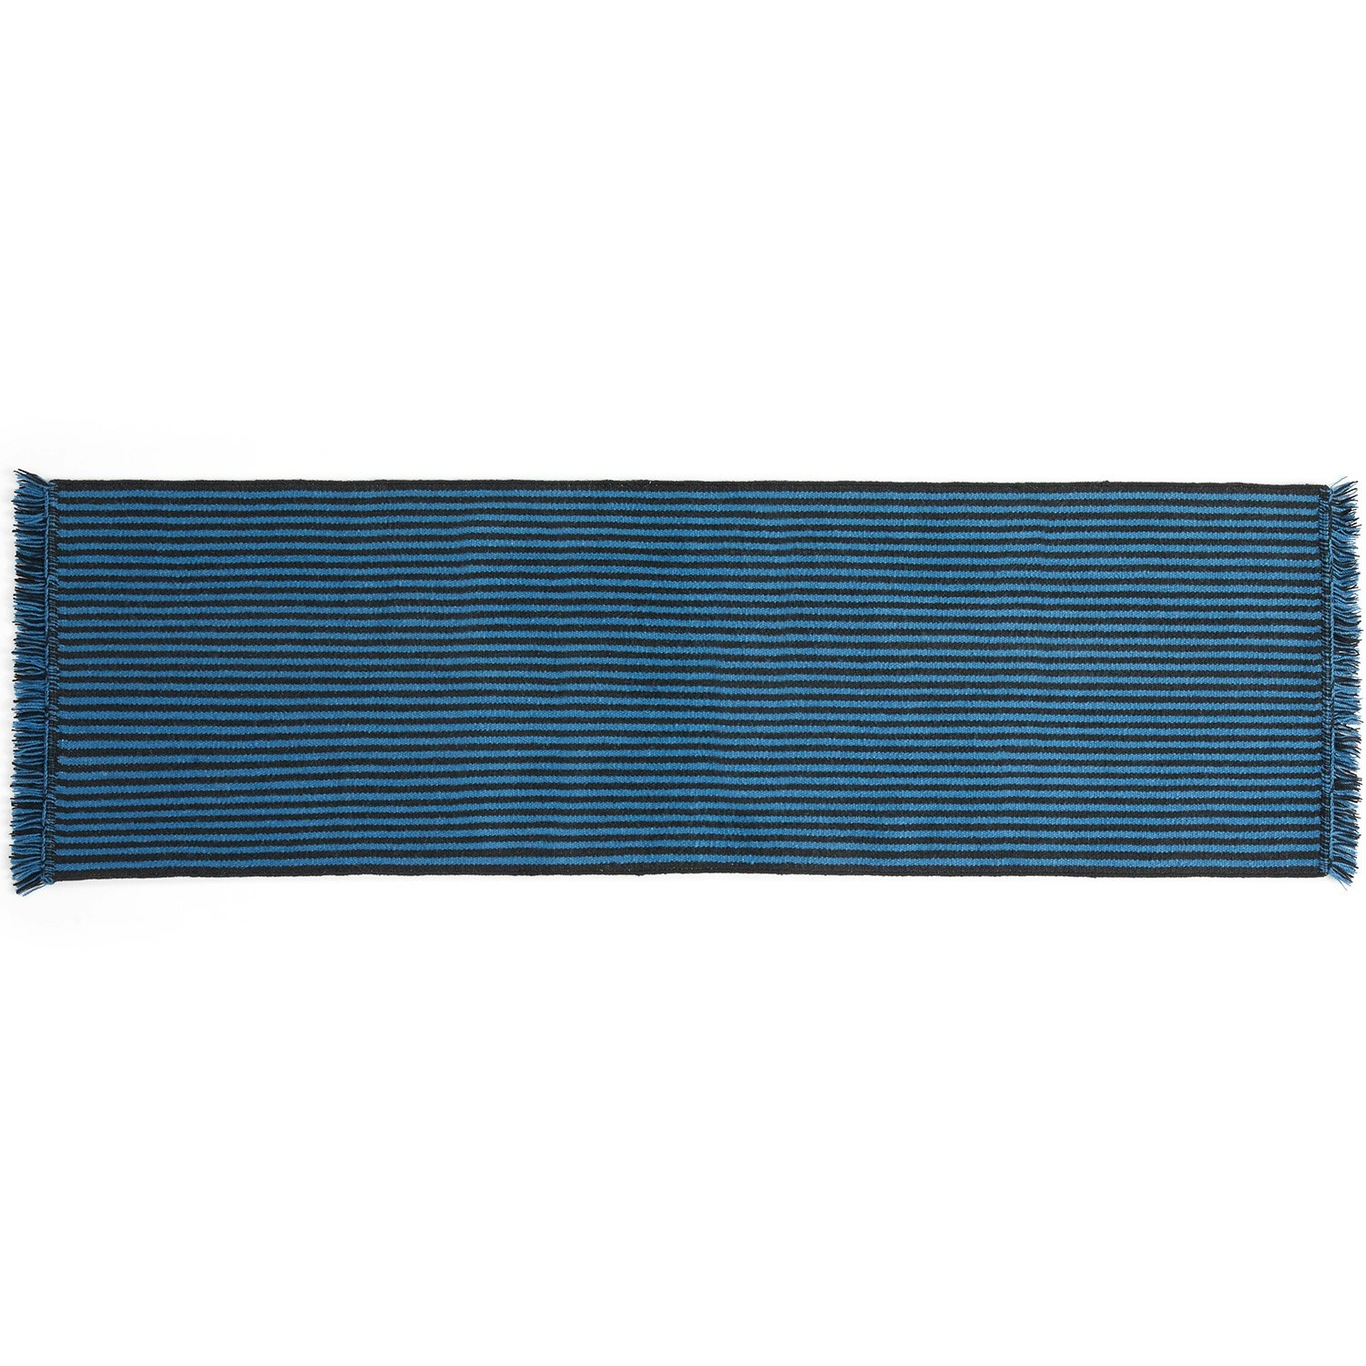 Stripes and Stripes Rug 60x200 cm, Blue